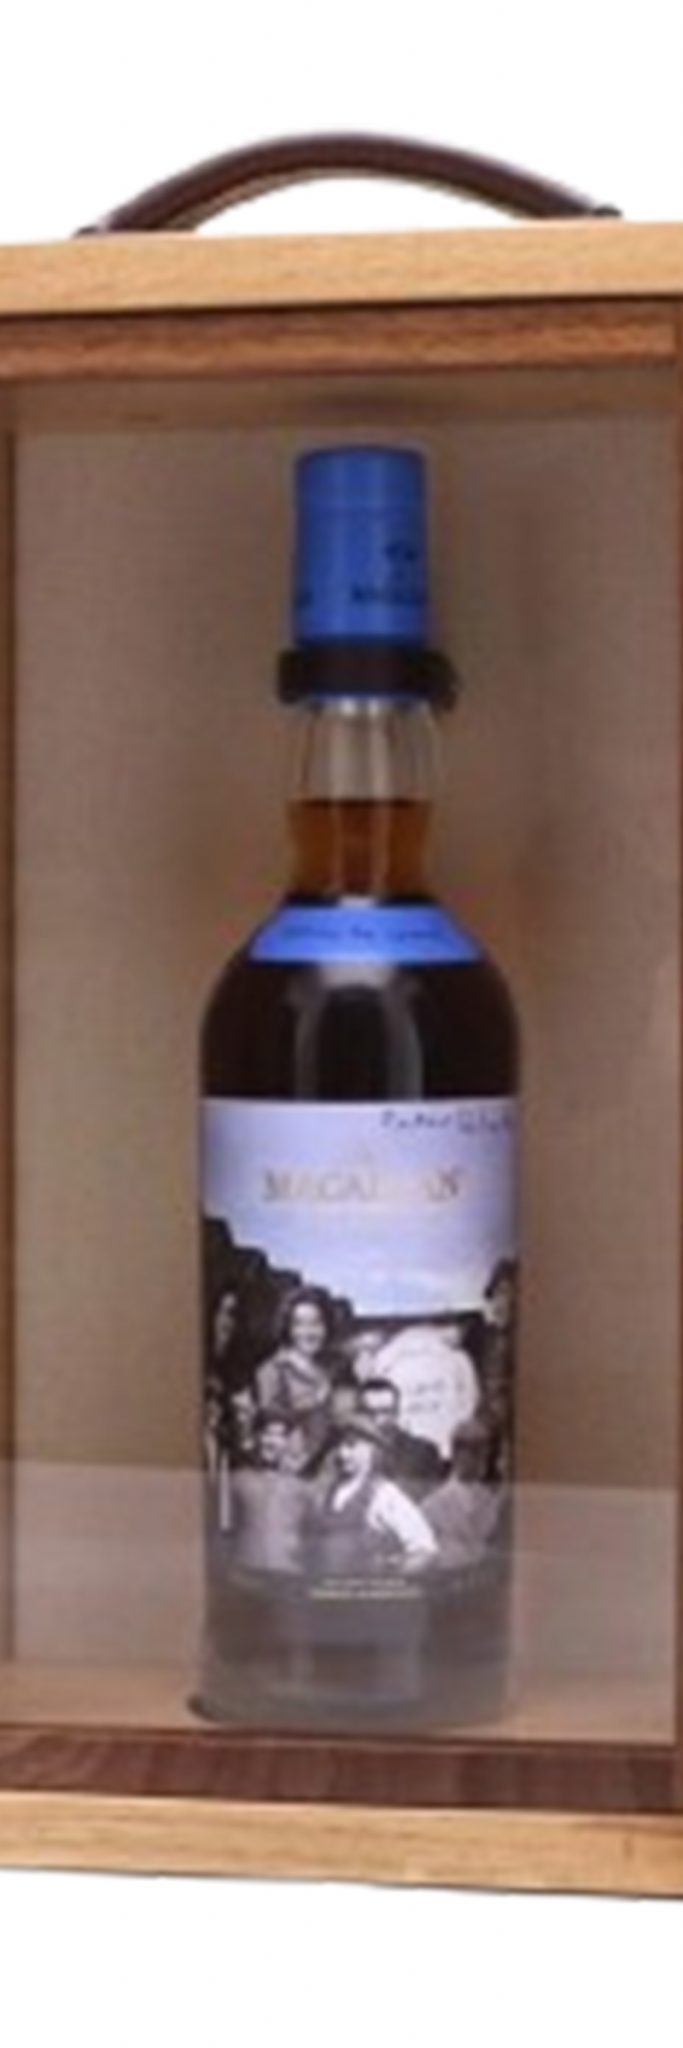 1967 Macallan Single Malt Scotch Whisky Sir Peter Blake, Down to Work 700ml